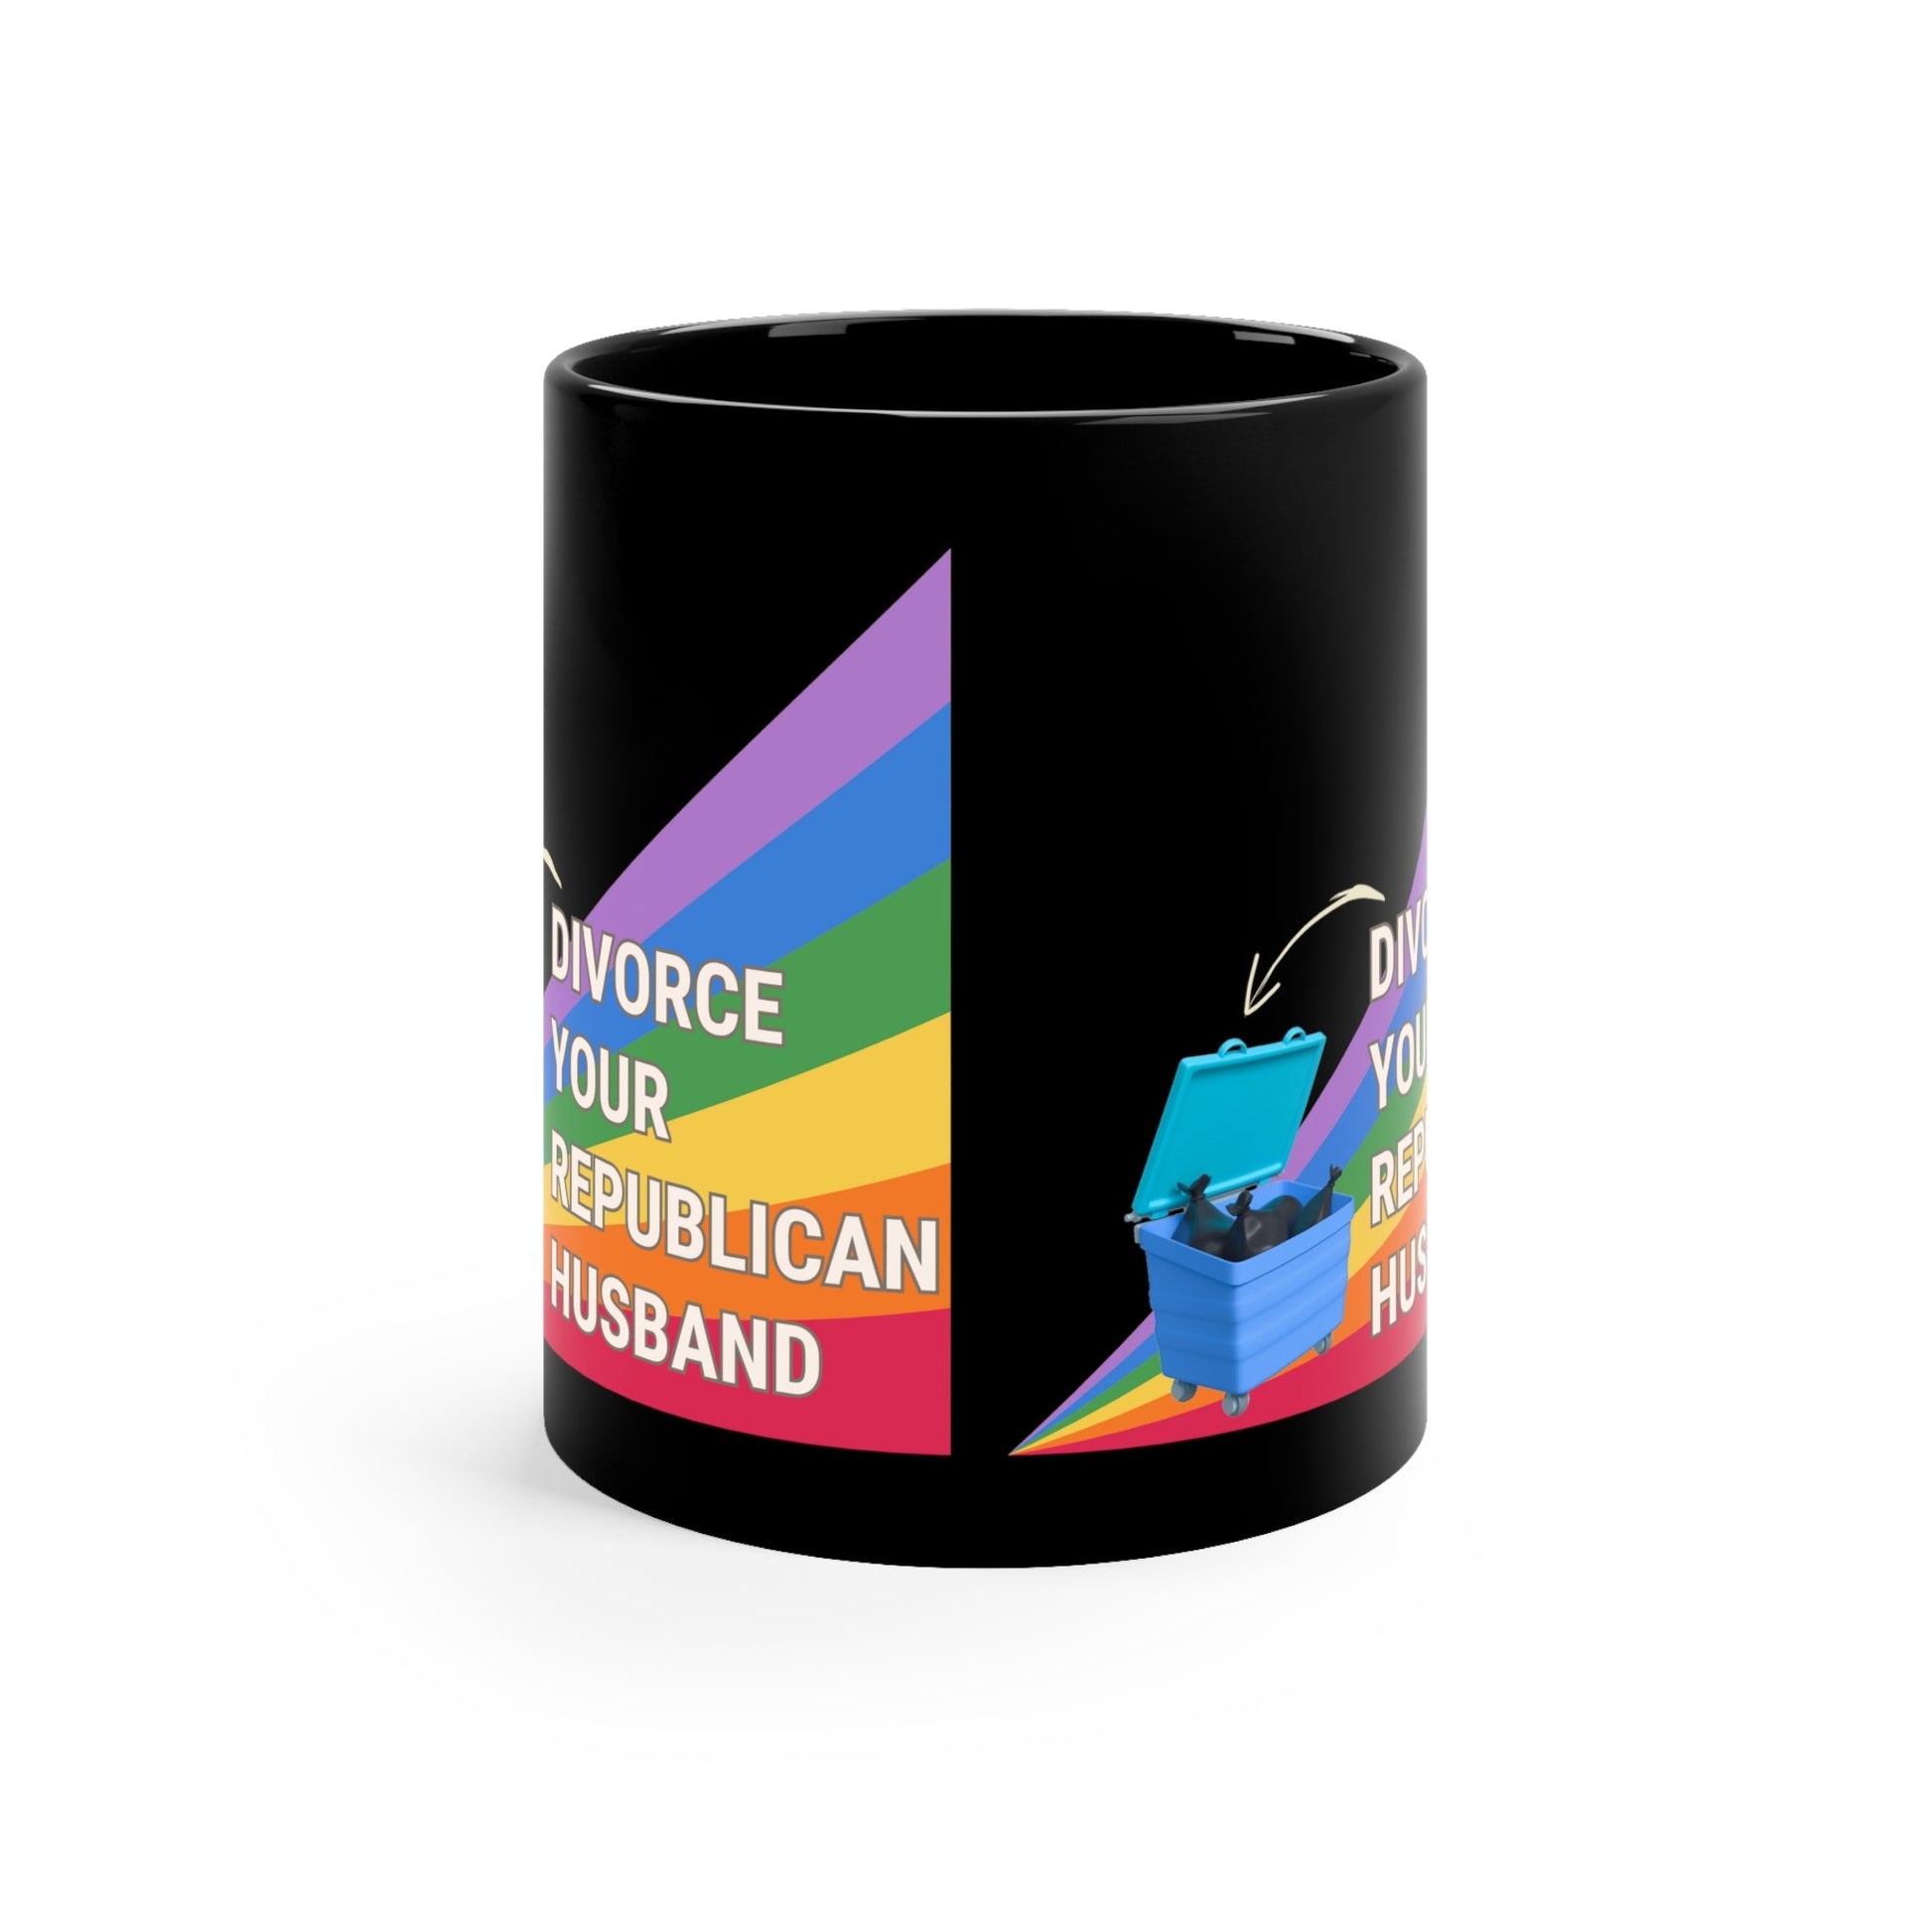 Divorce Your Republican Husband Mug in Black